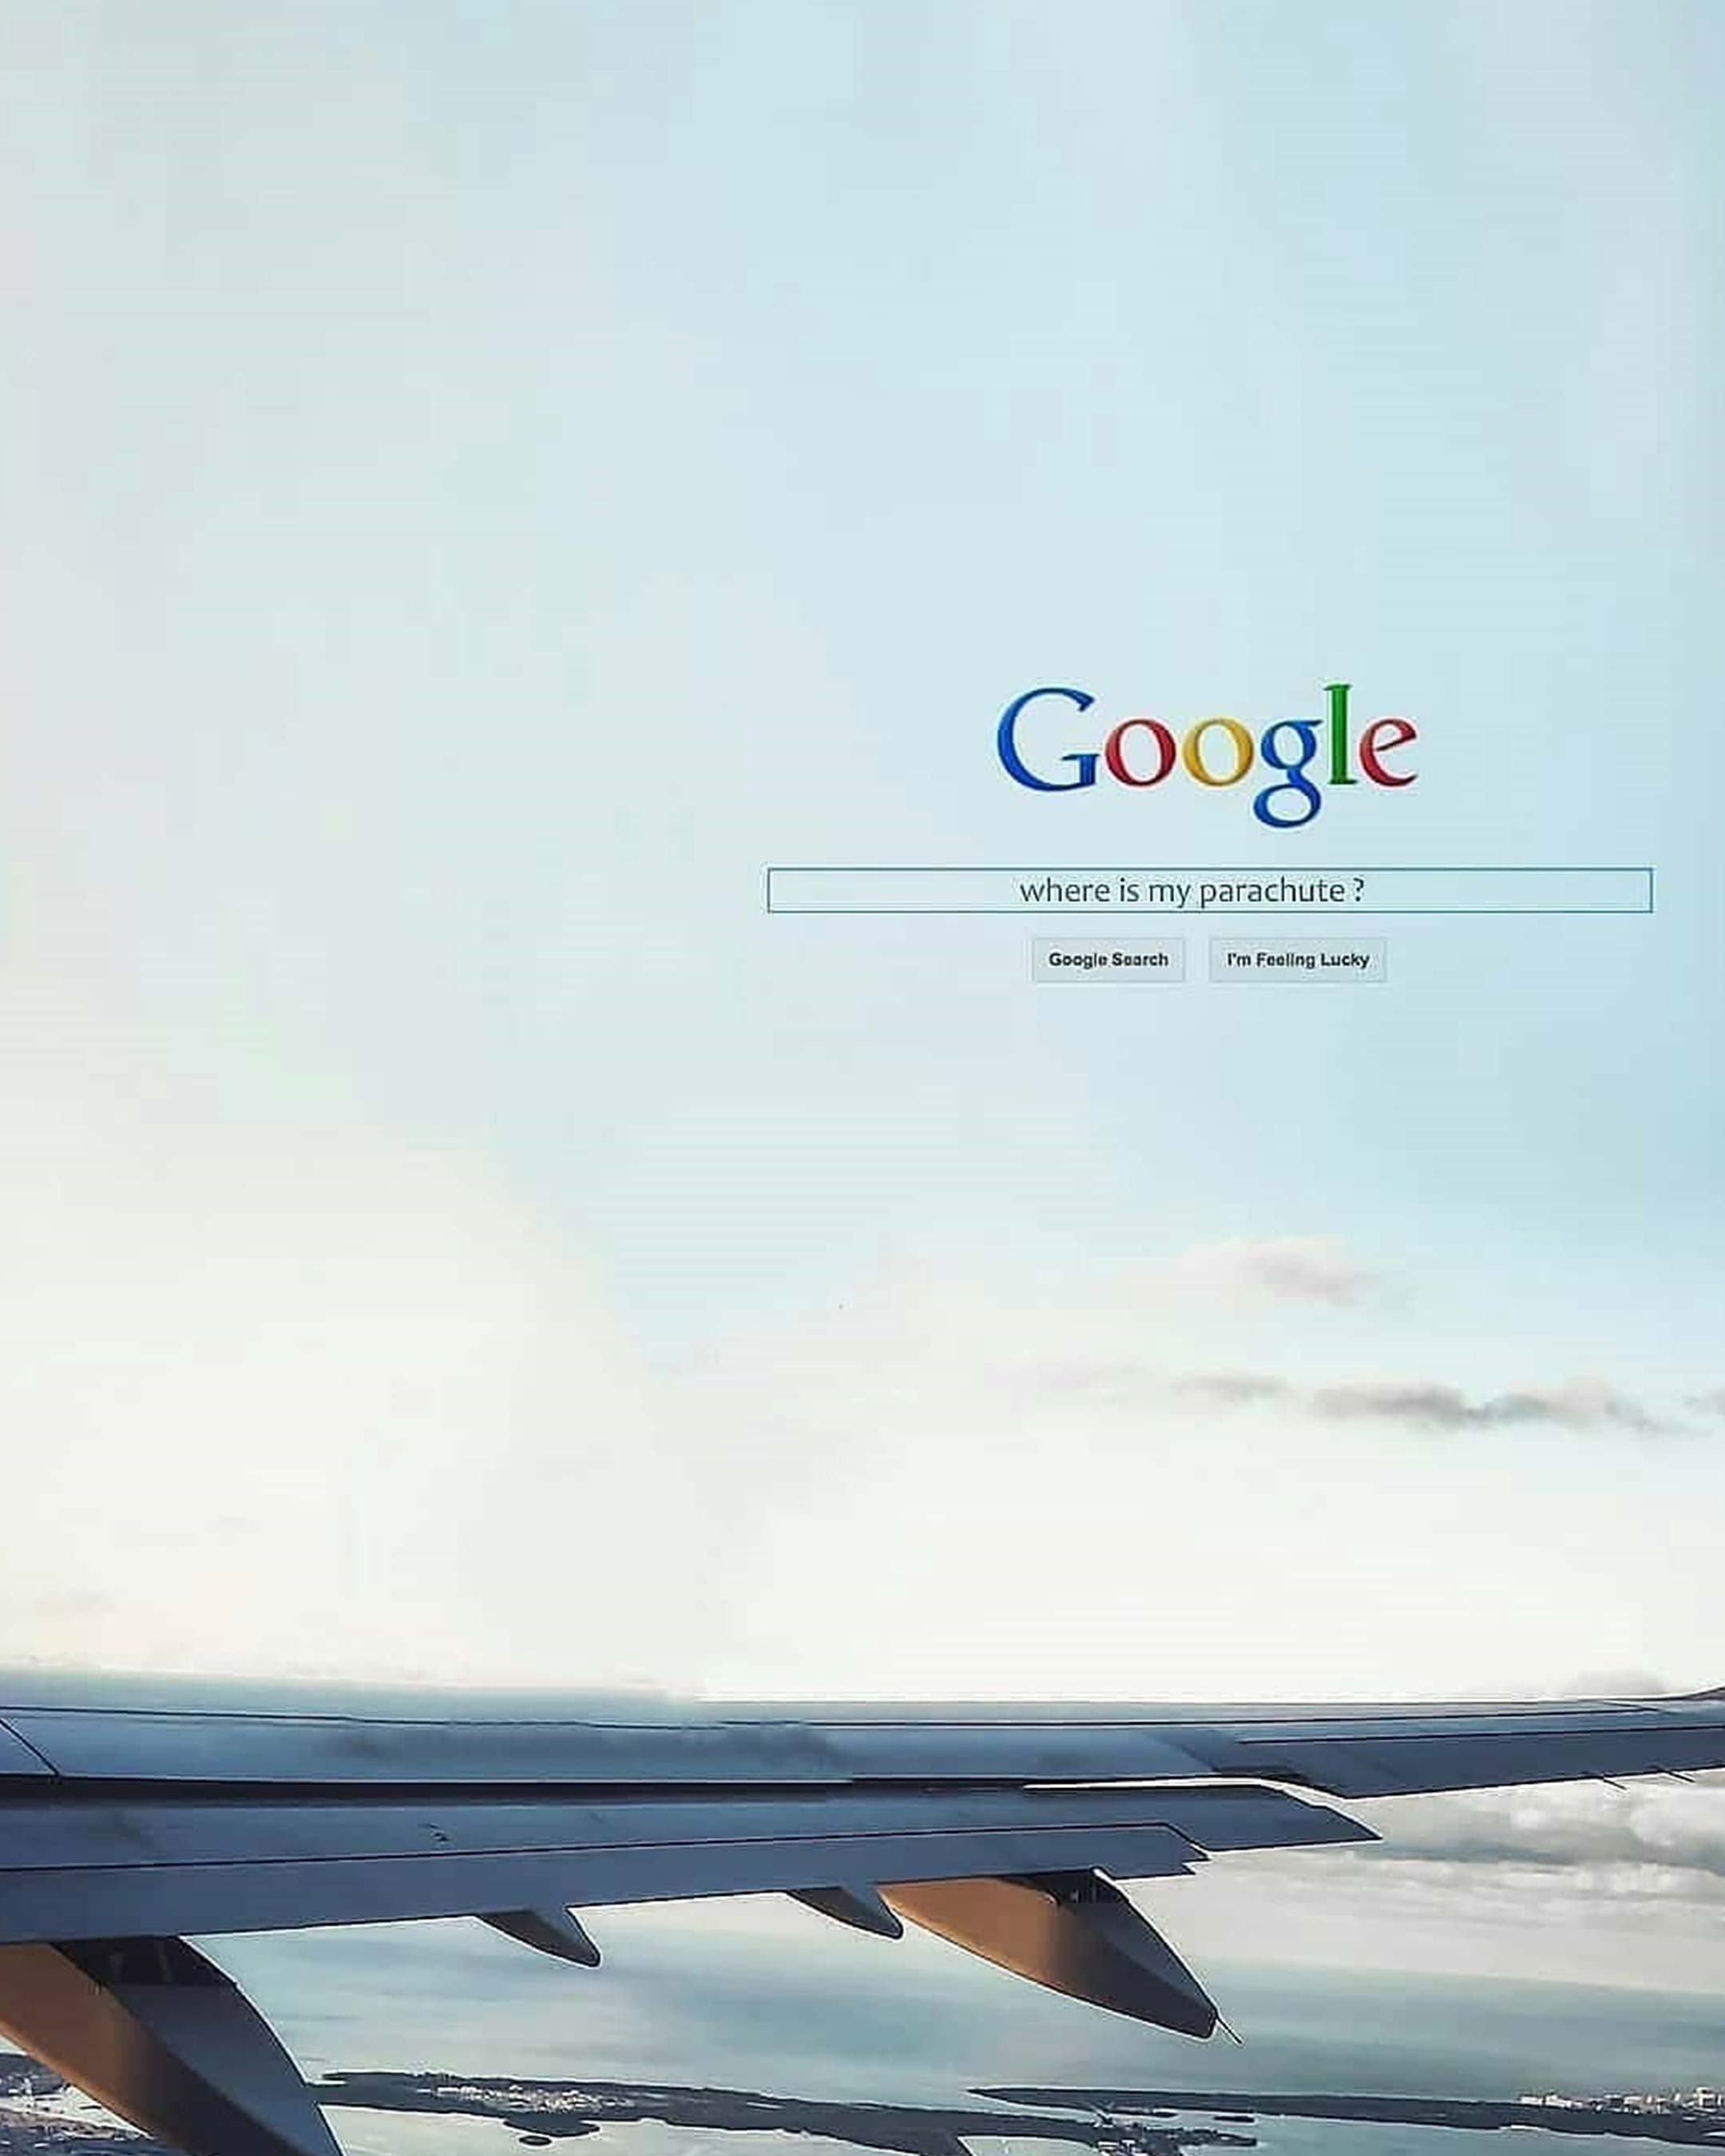 Google PicsArt Background Free Stock Image